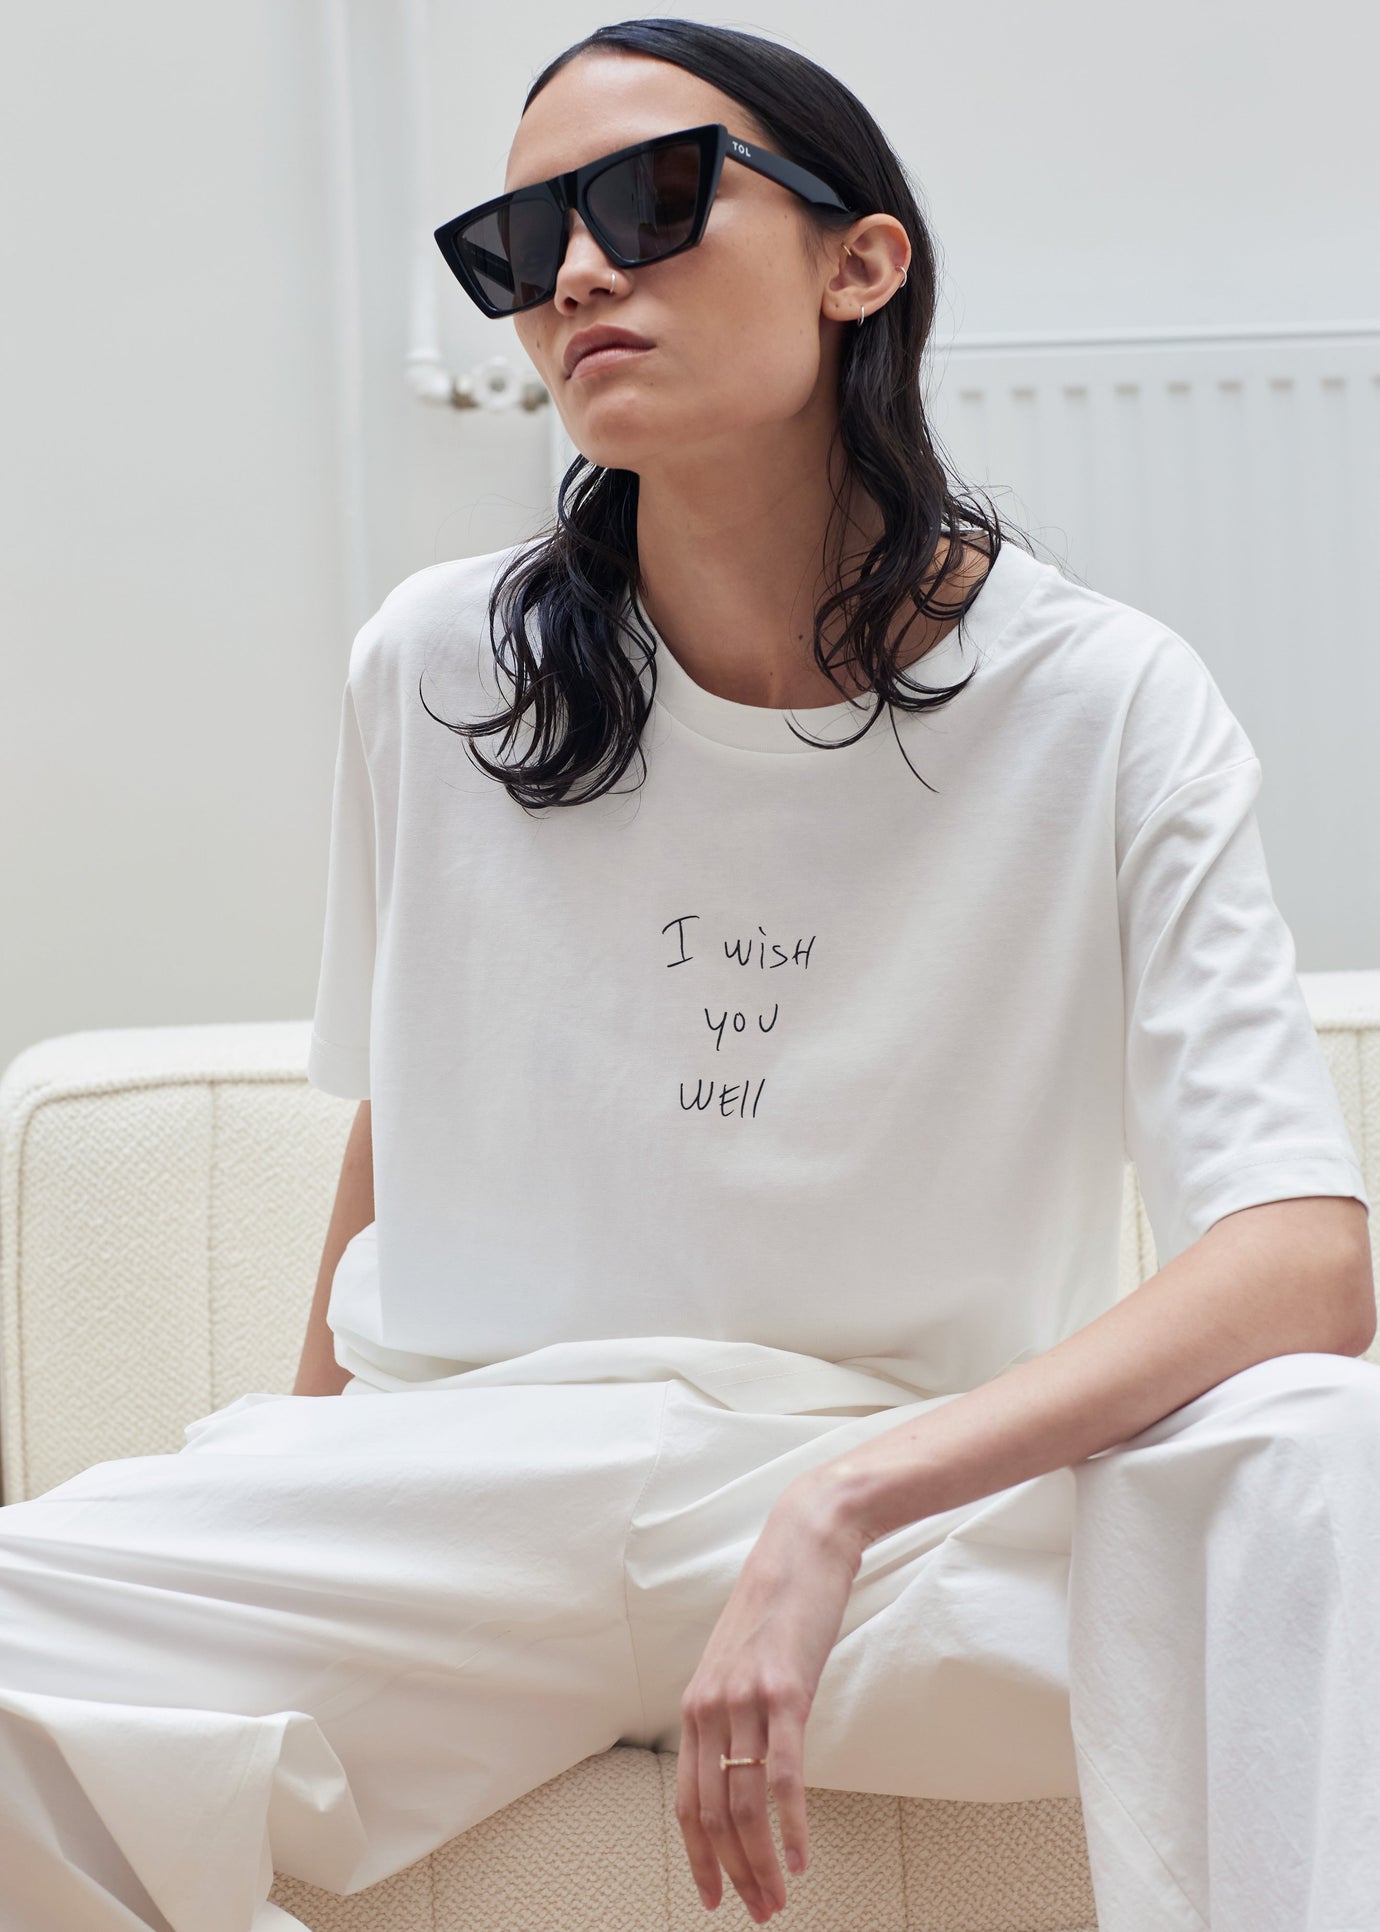 The Frankie Shop x Thomas Lélu Slope T-Shirt - Off White/Black